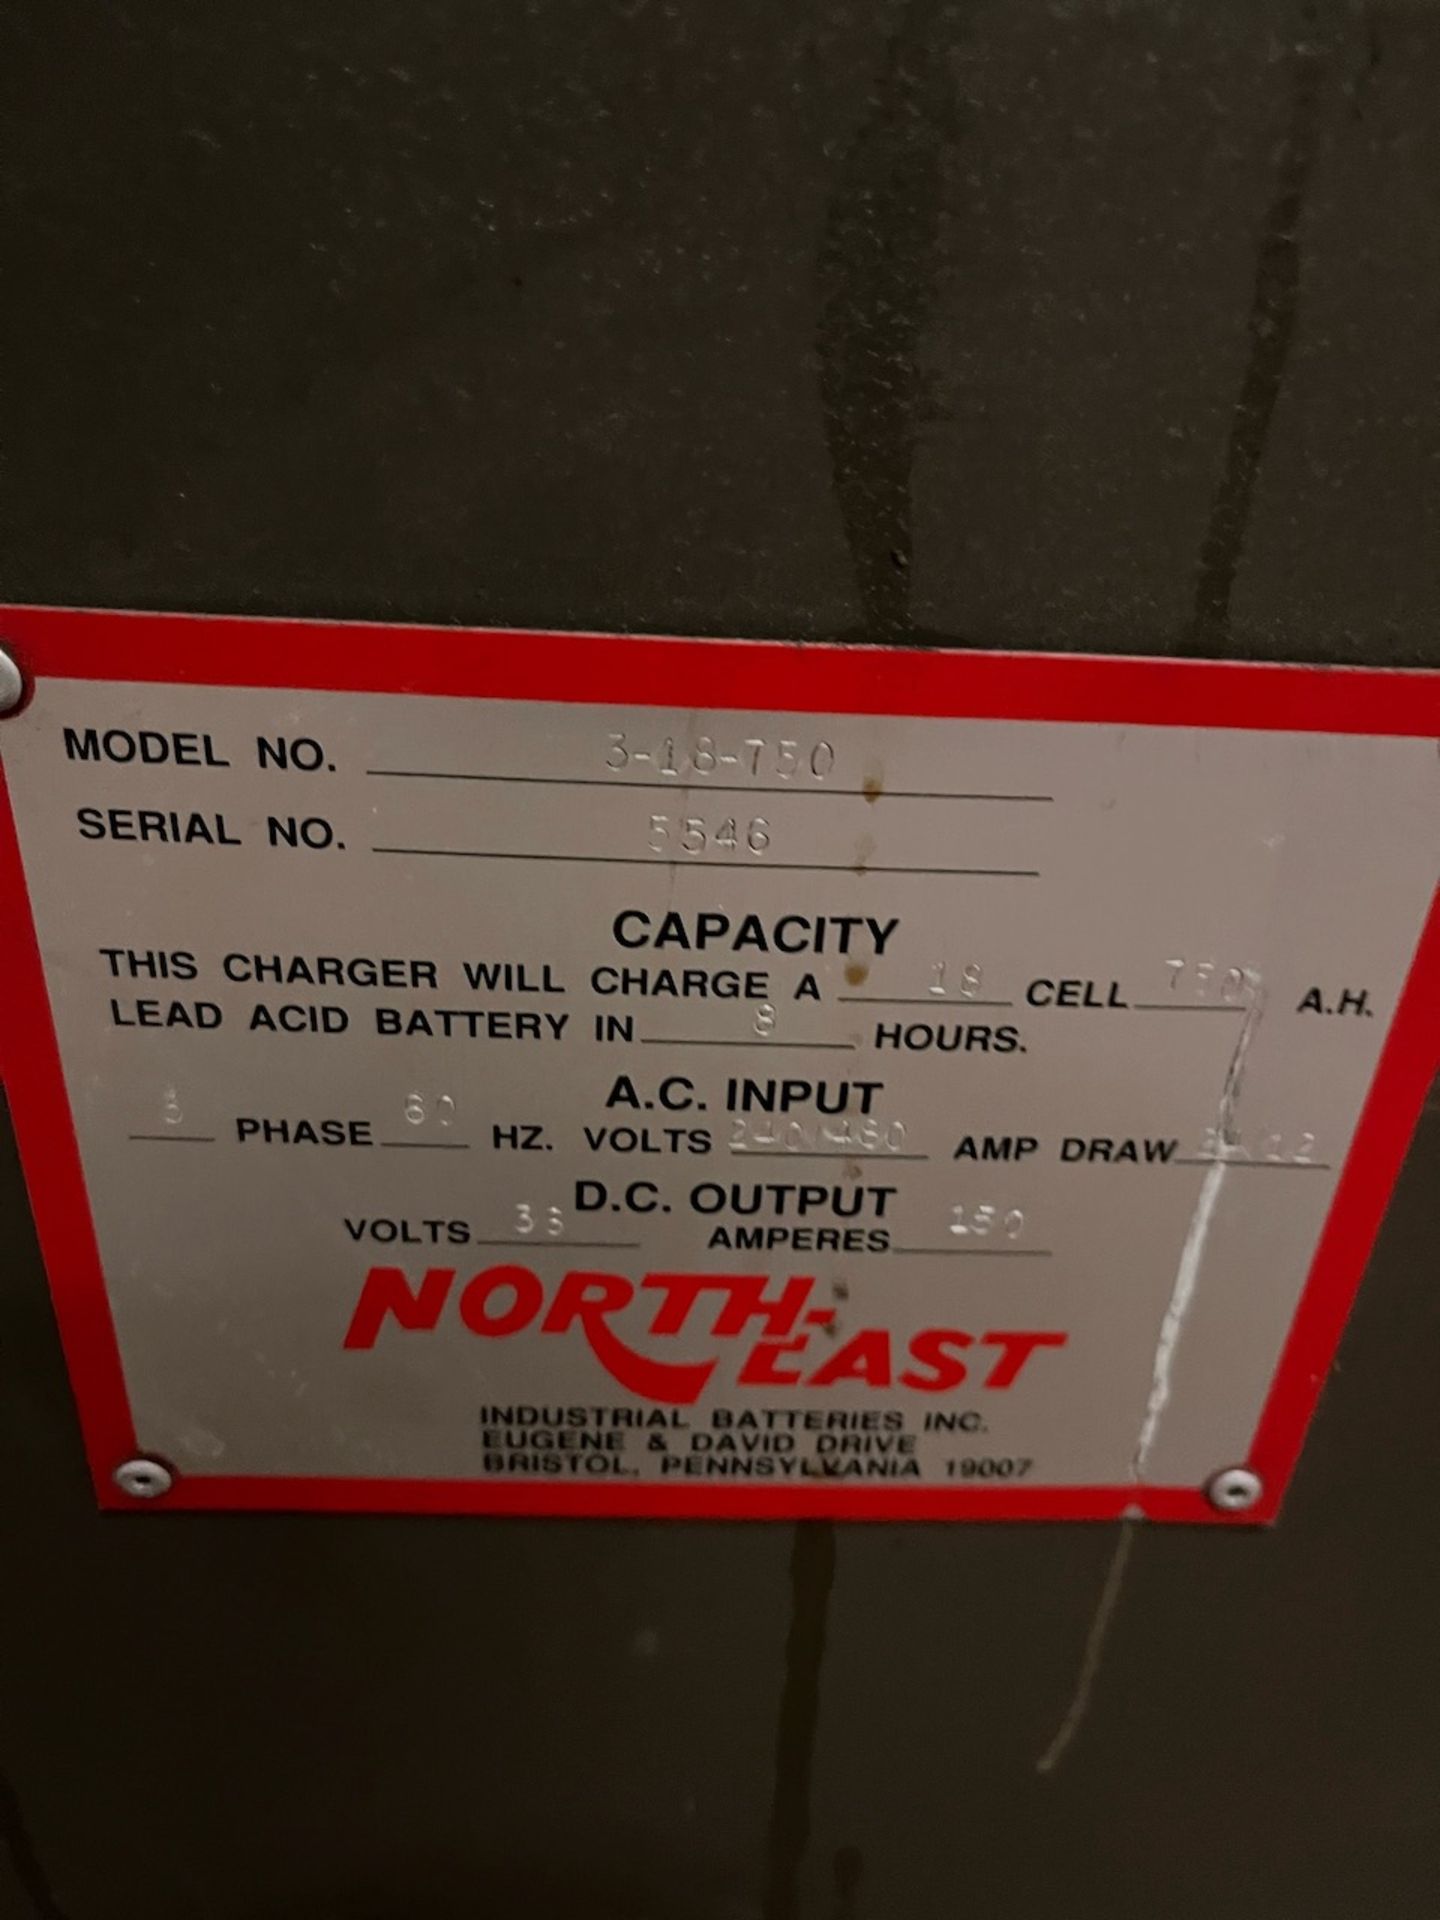 Northeast battery charger model # 3-18-750 ser # 5546 - Image 2 of 2